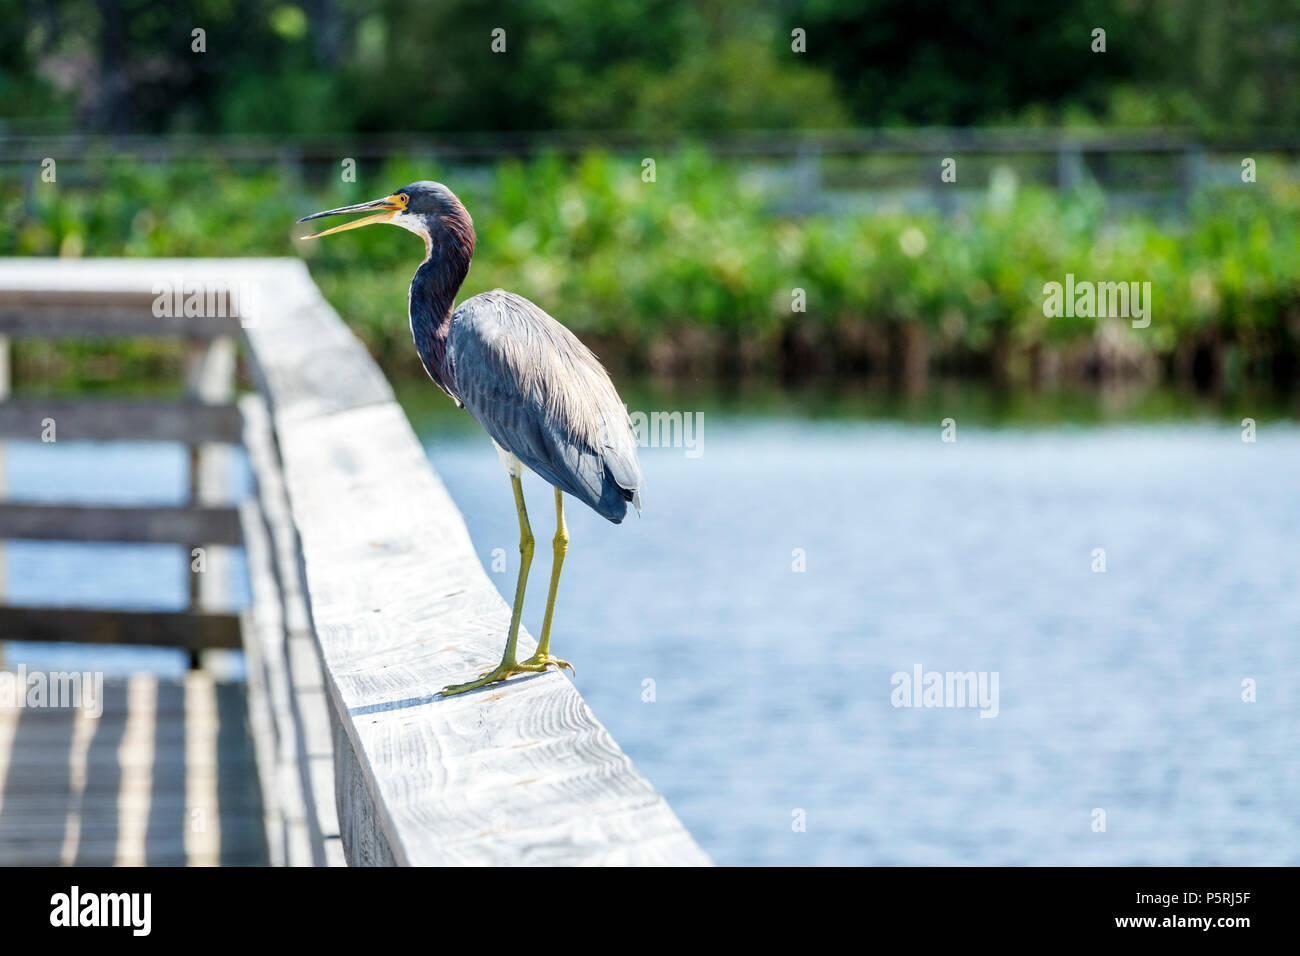 Delray Beach Florida, wetlands Wakodahatchee, naturaleza reserva de vida silvestre, parque, paseo marítimo, sendero, hábitat de aves protegidas, proyecto de recuperación de agua, tricolor Foto de stock